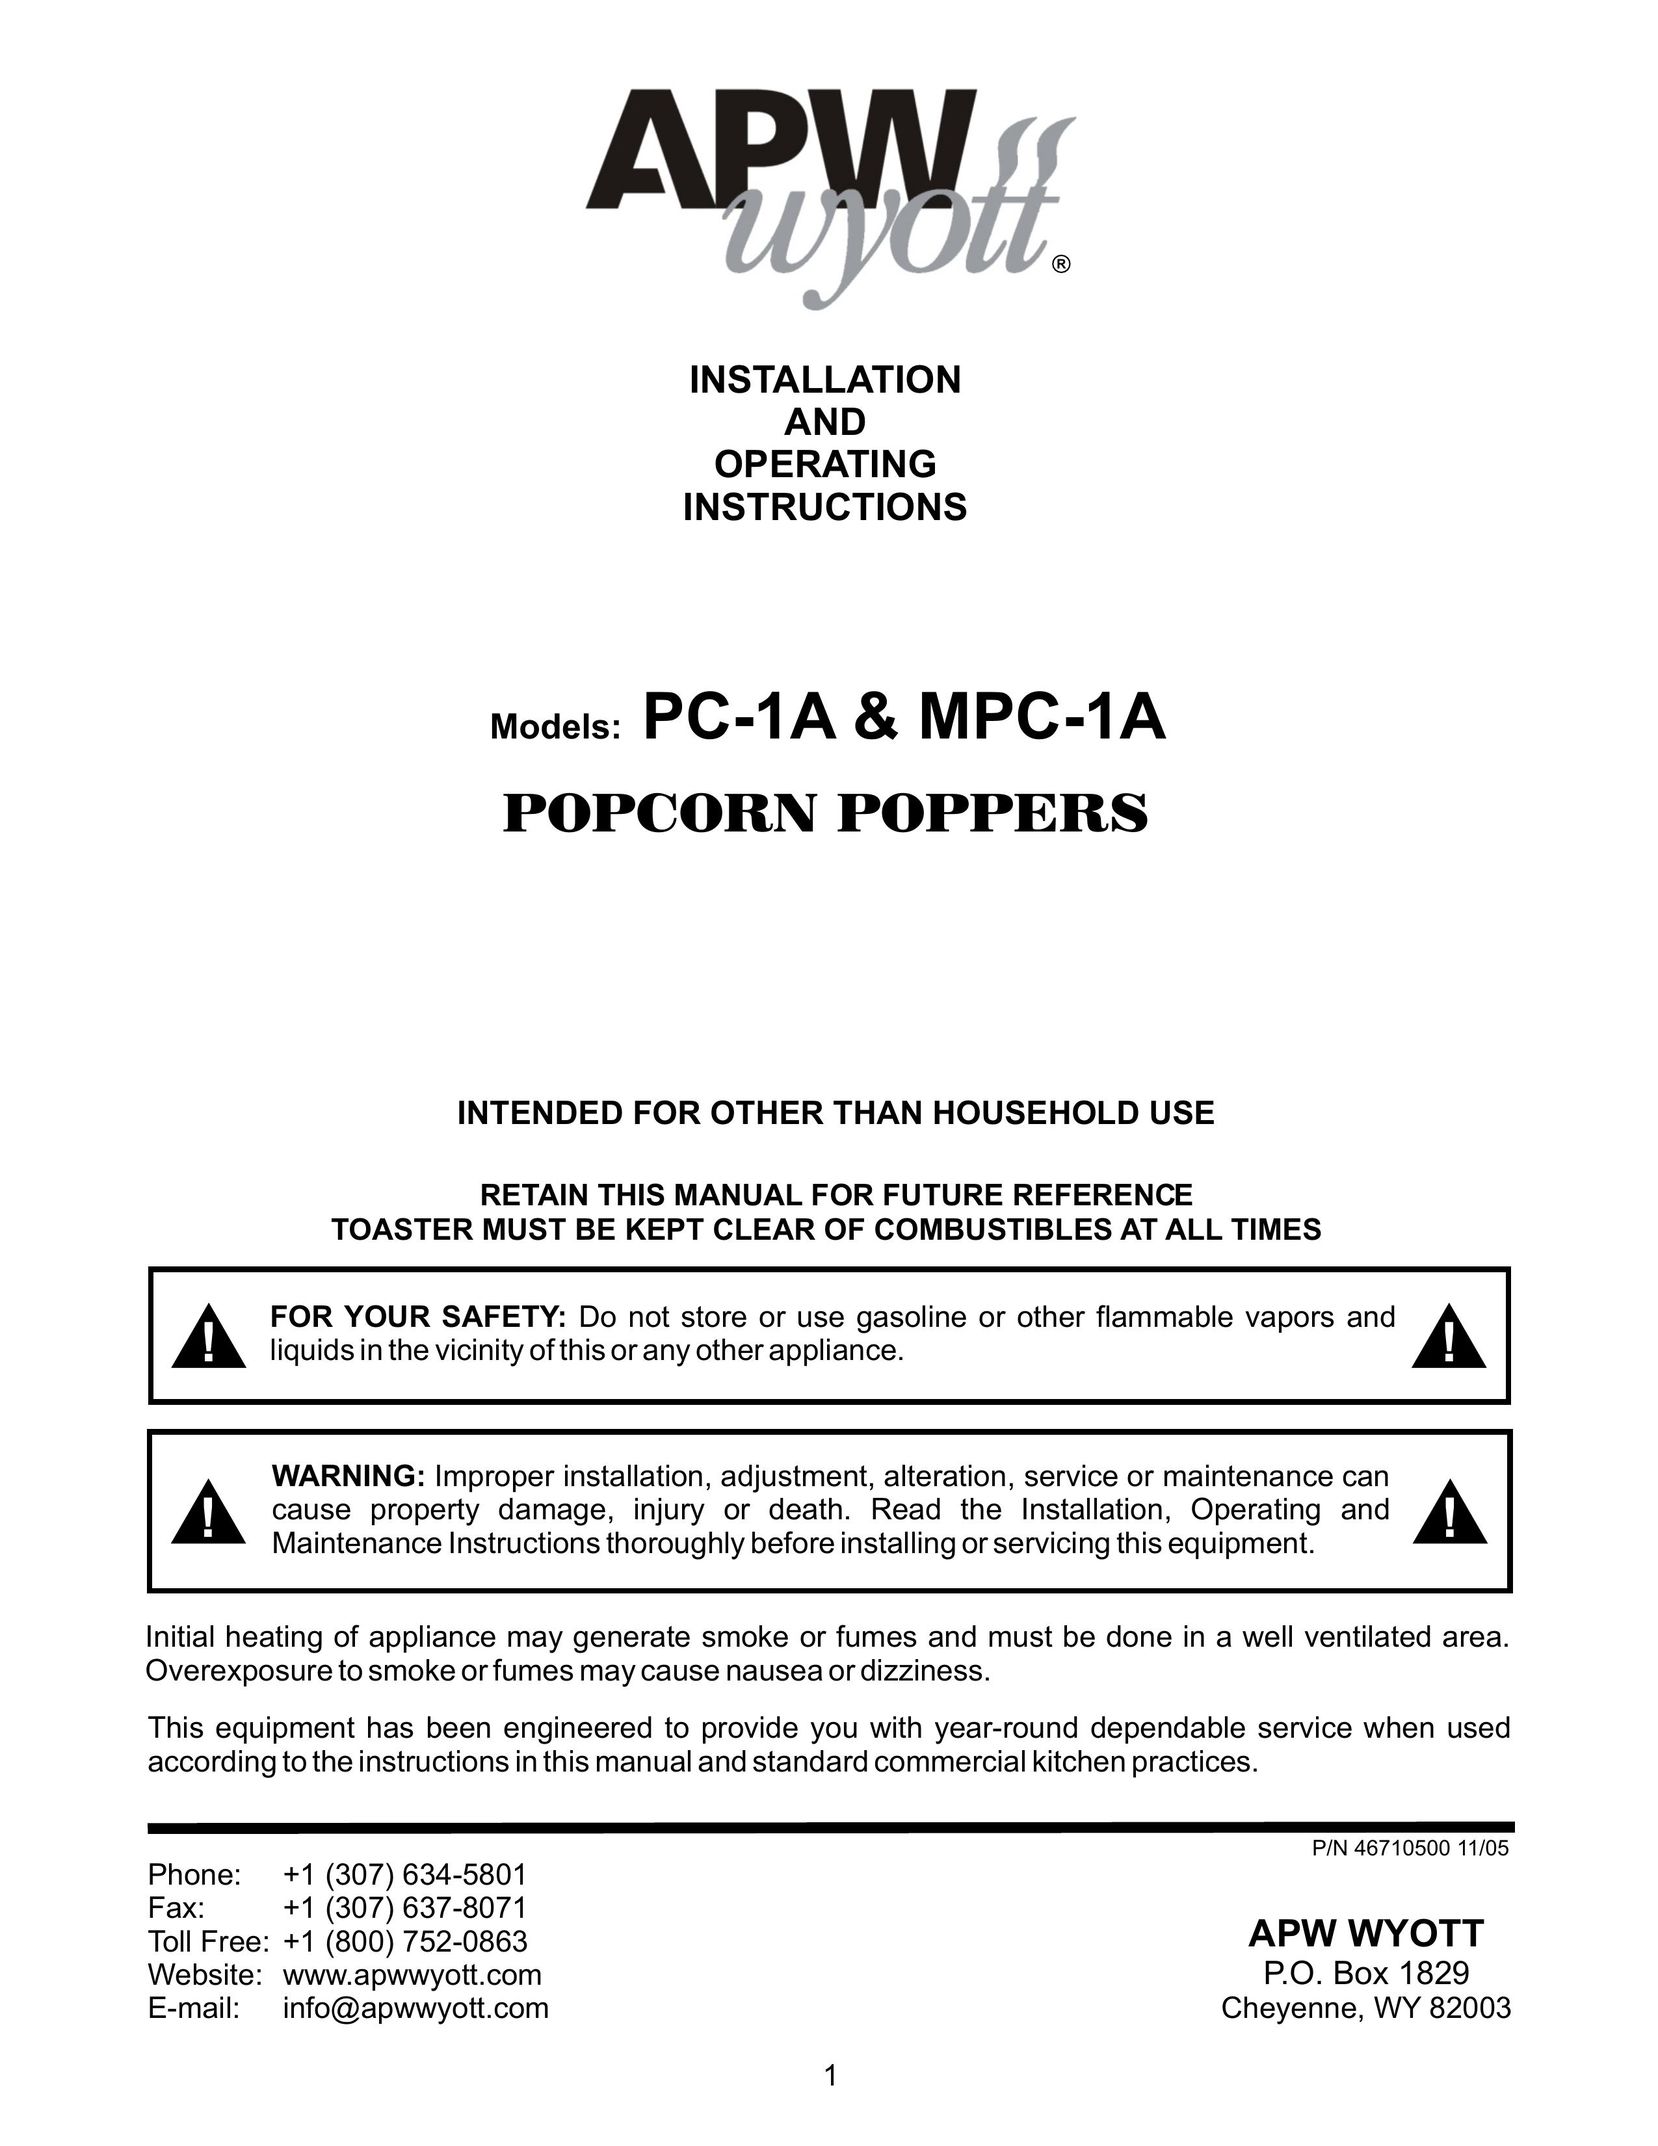 APW Wyott PC-1A Popcorn Poppers User Manual